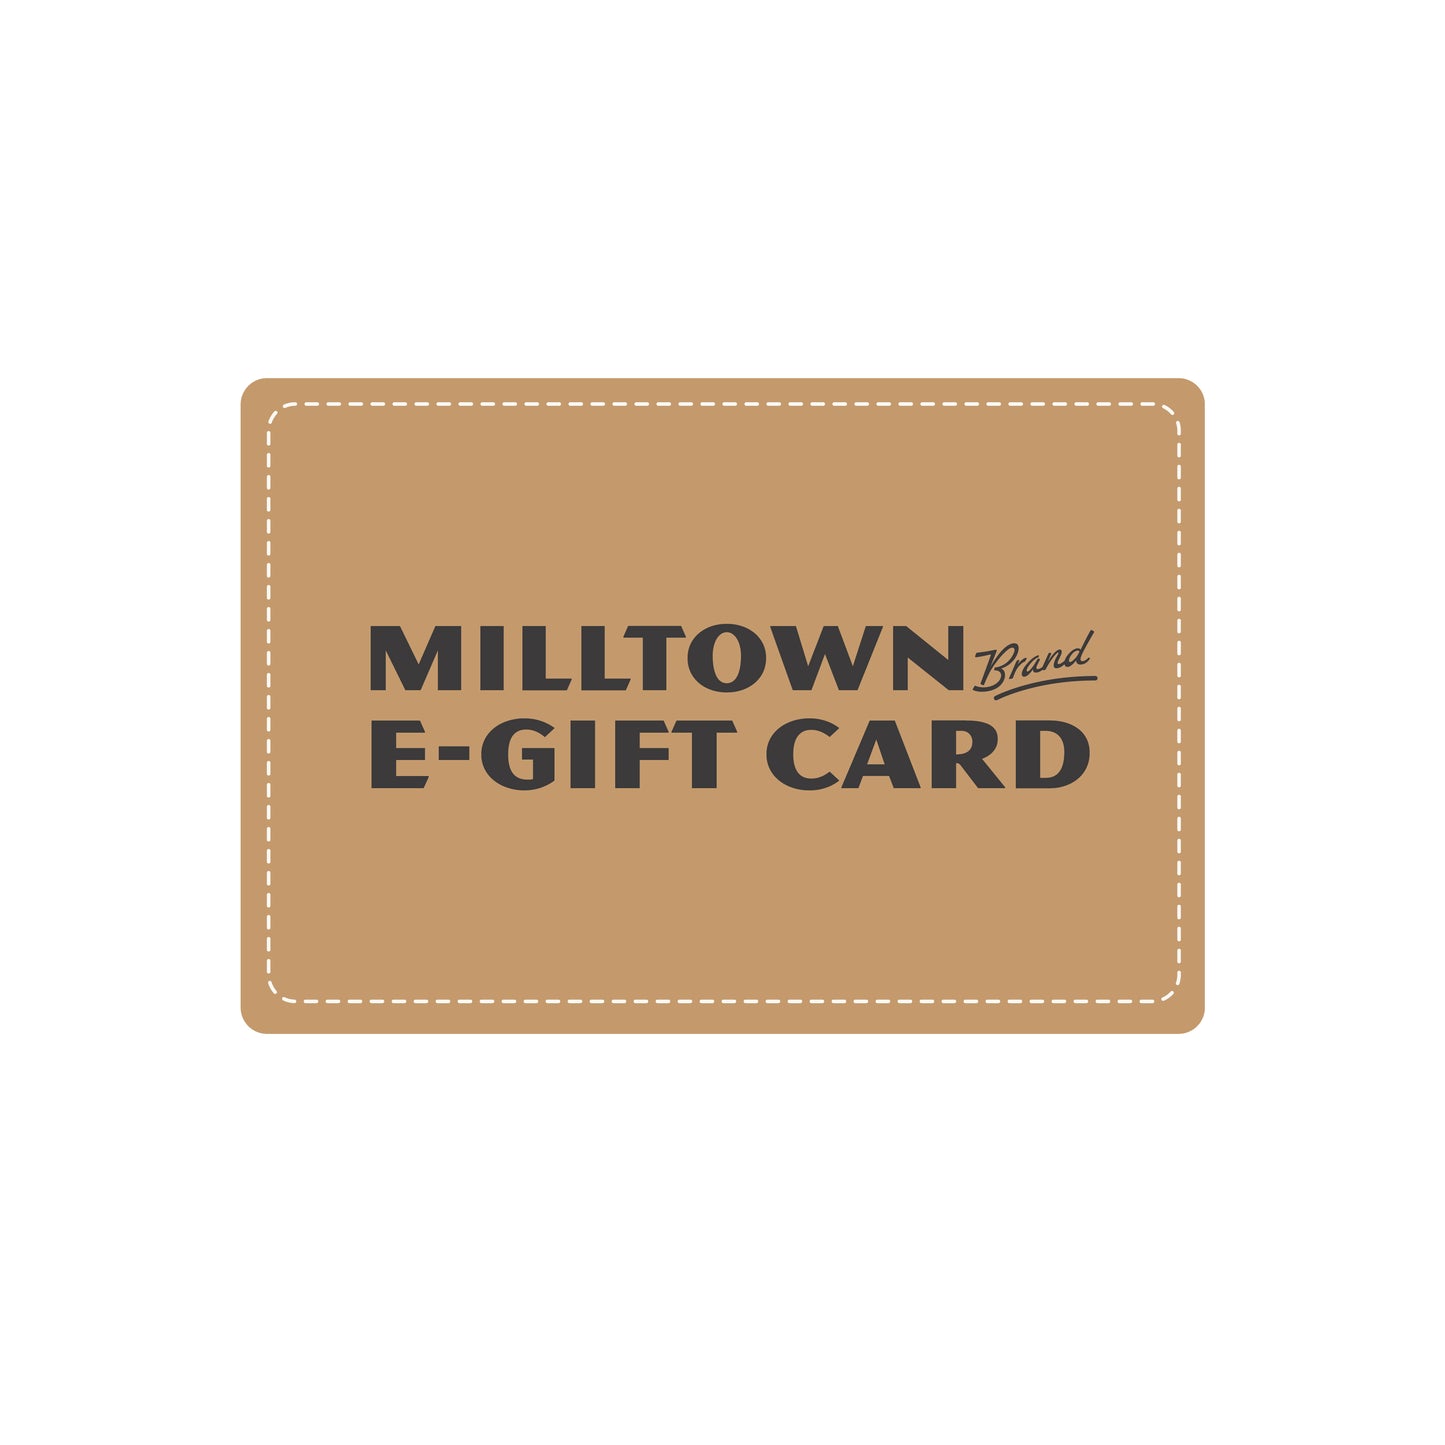 Milltown Brand E-Gift Card